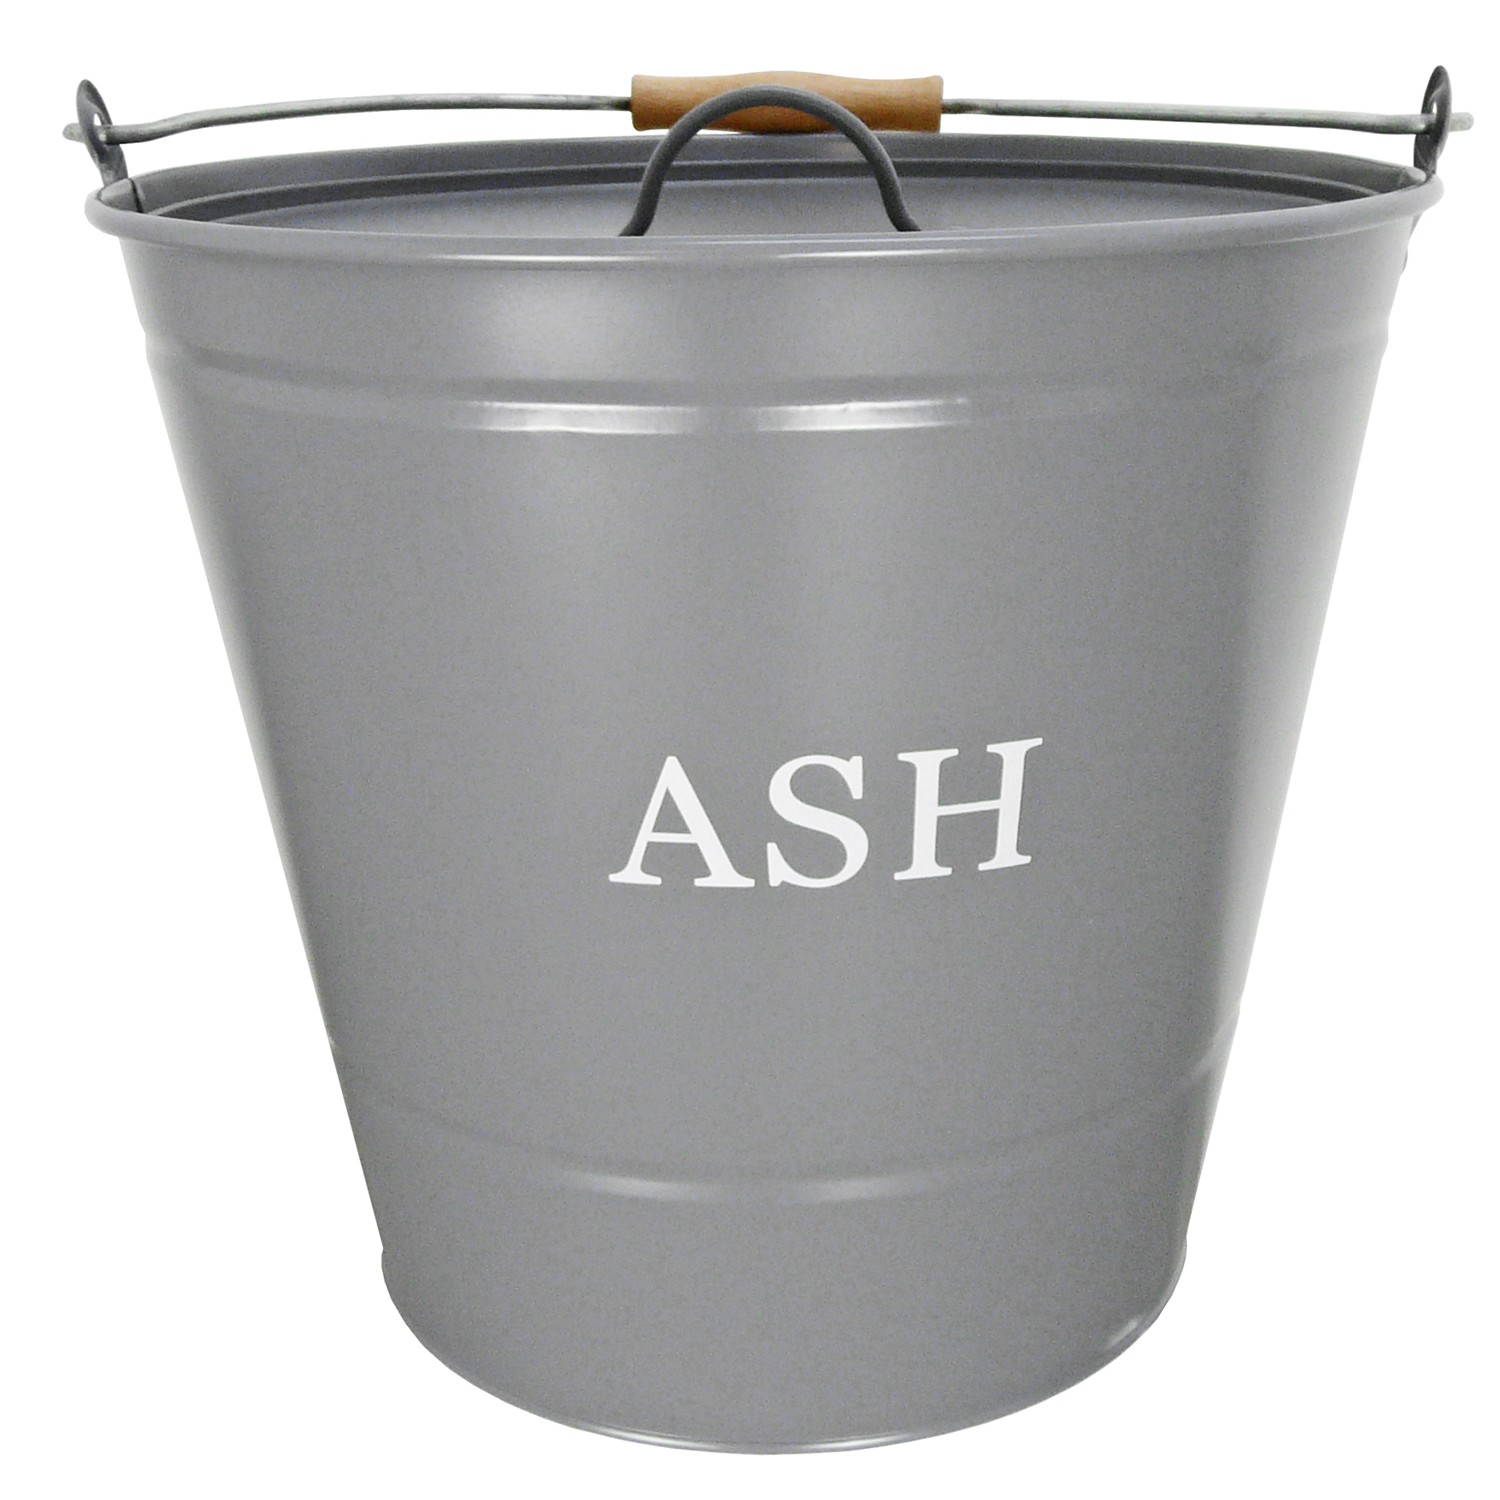 ash buckets